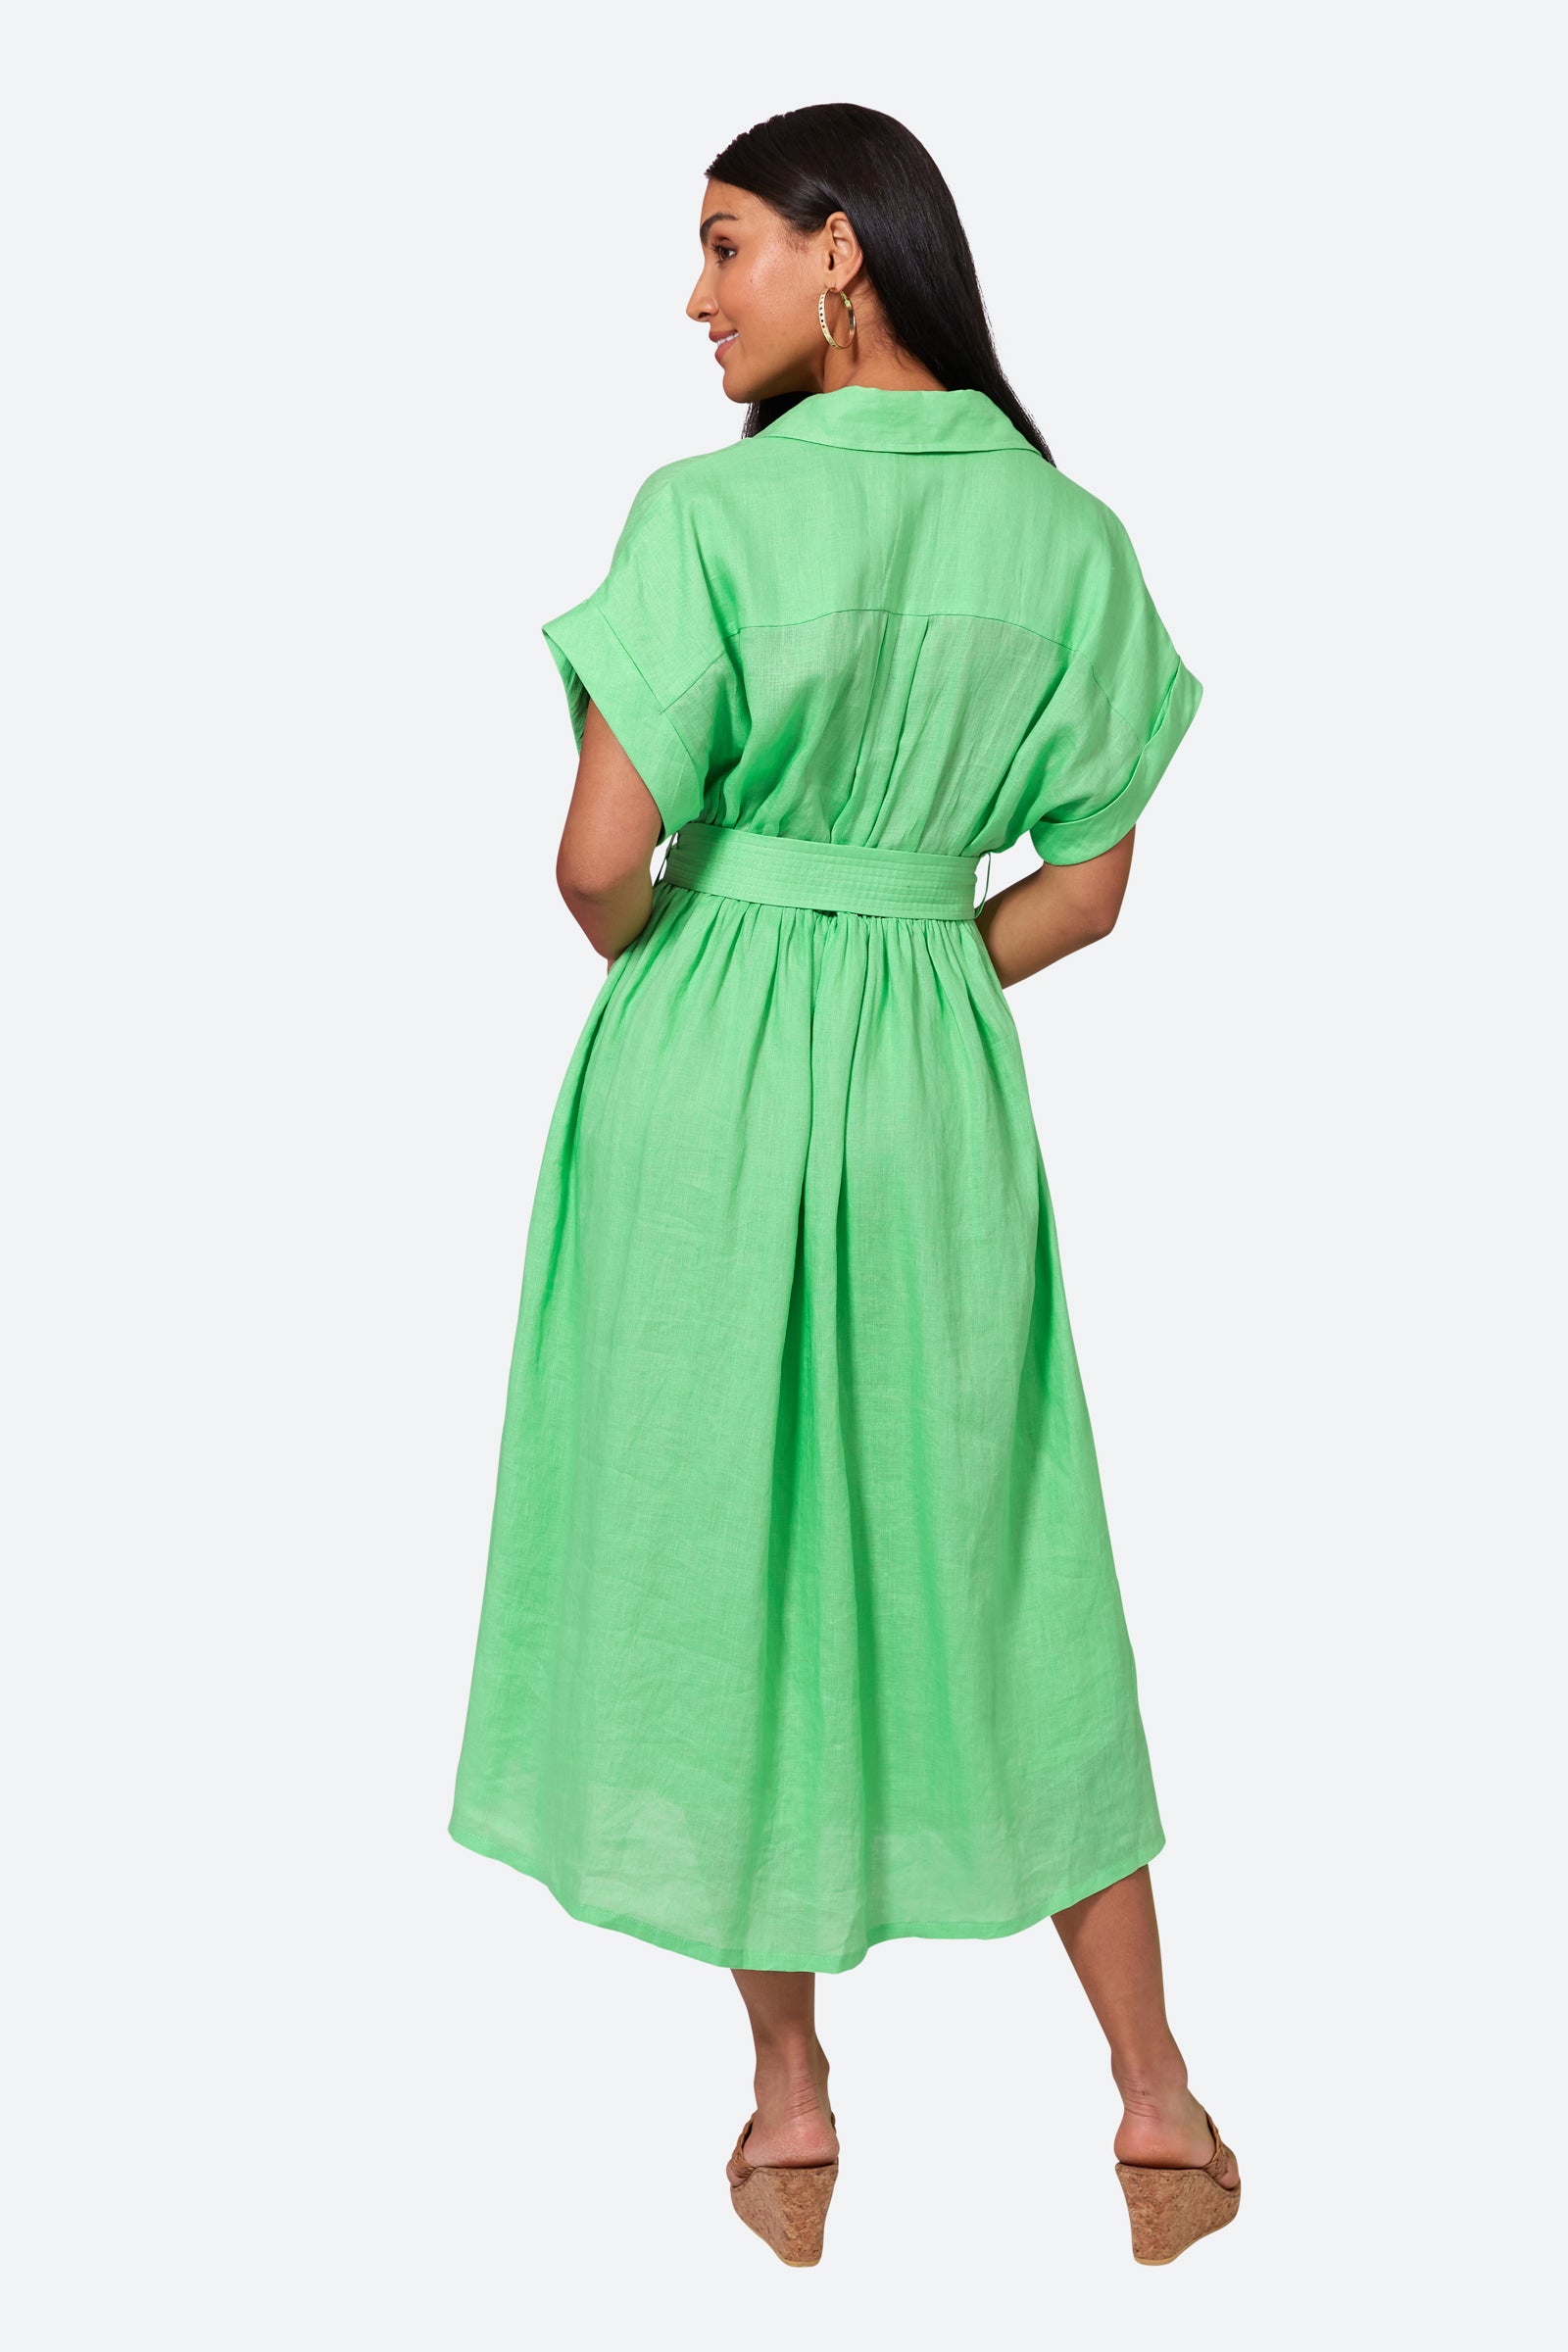 La Vie Shirt Dress - Kiwi - eb&ive Clothing - Shirt Dress Maxi Linen